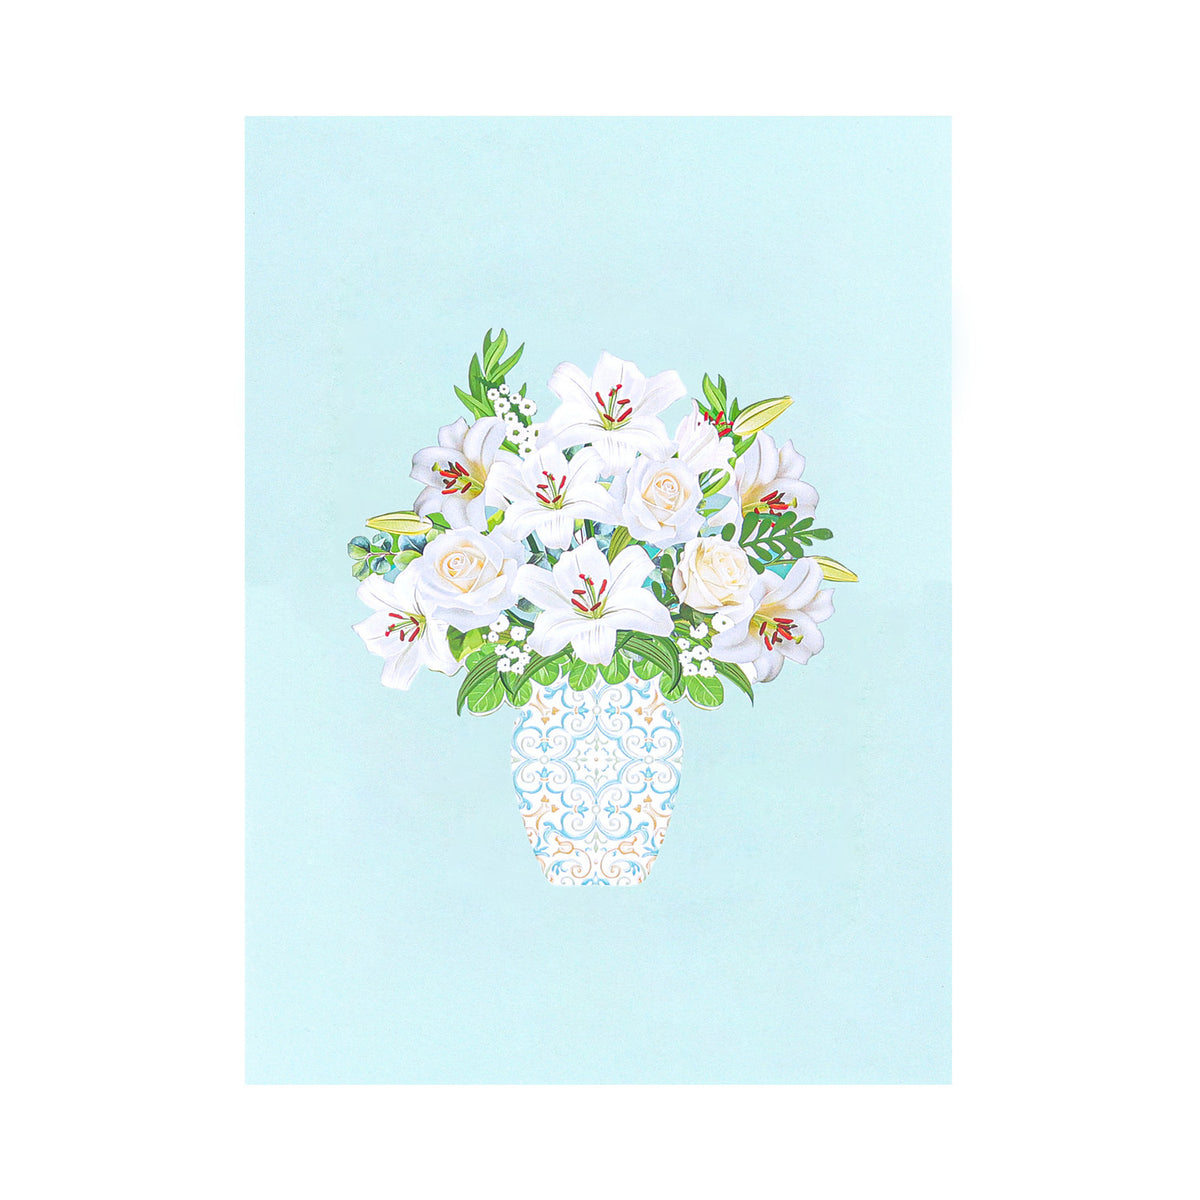 Lily Bouquet Pop-Up Card